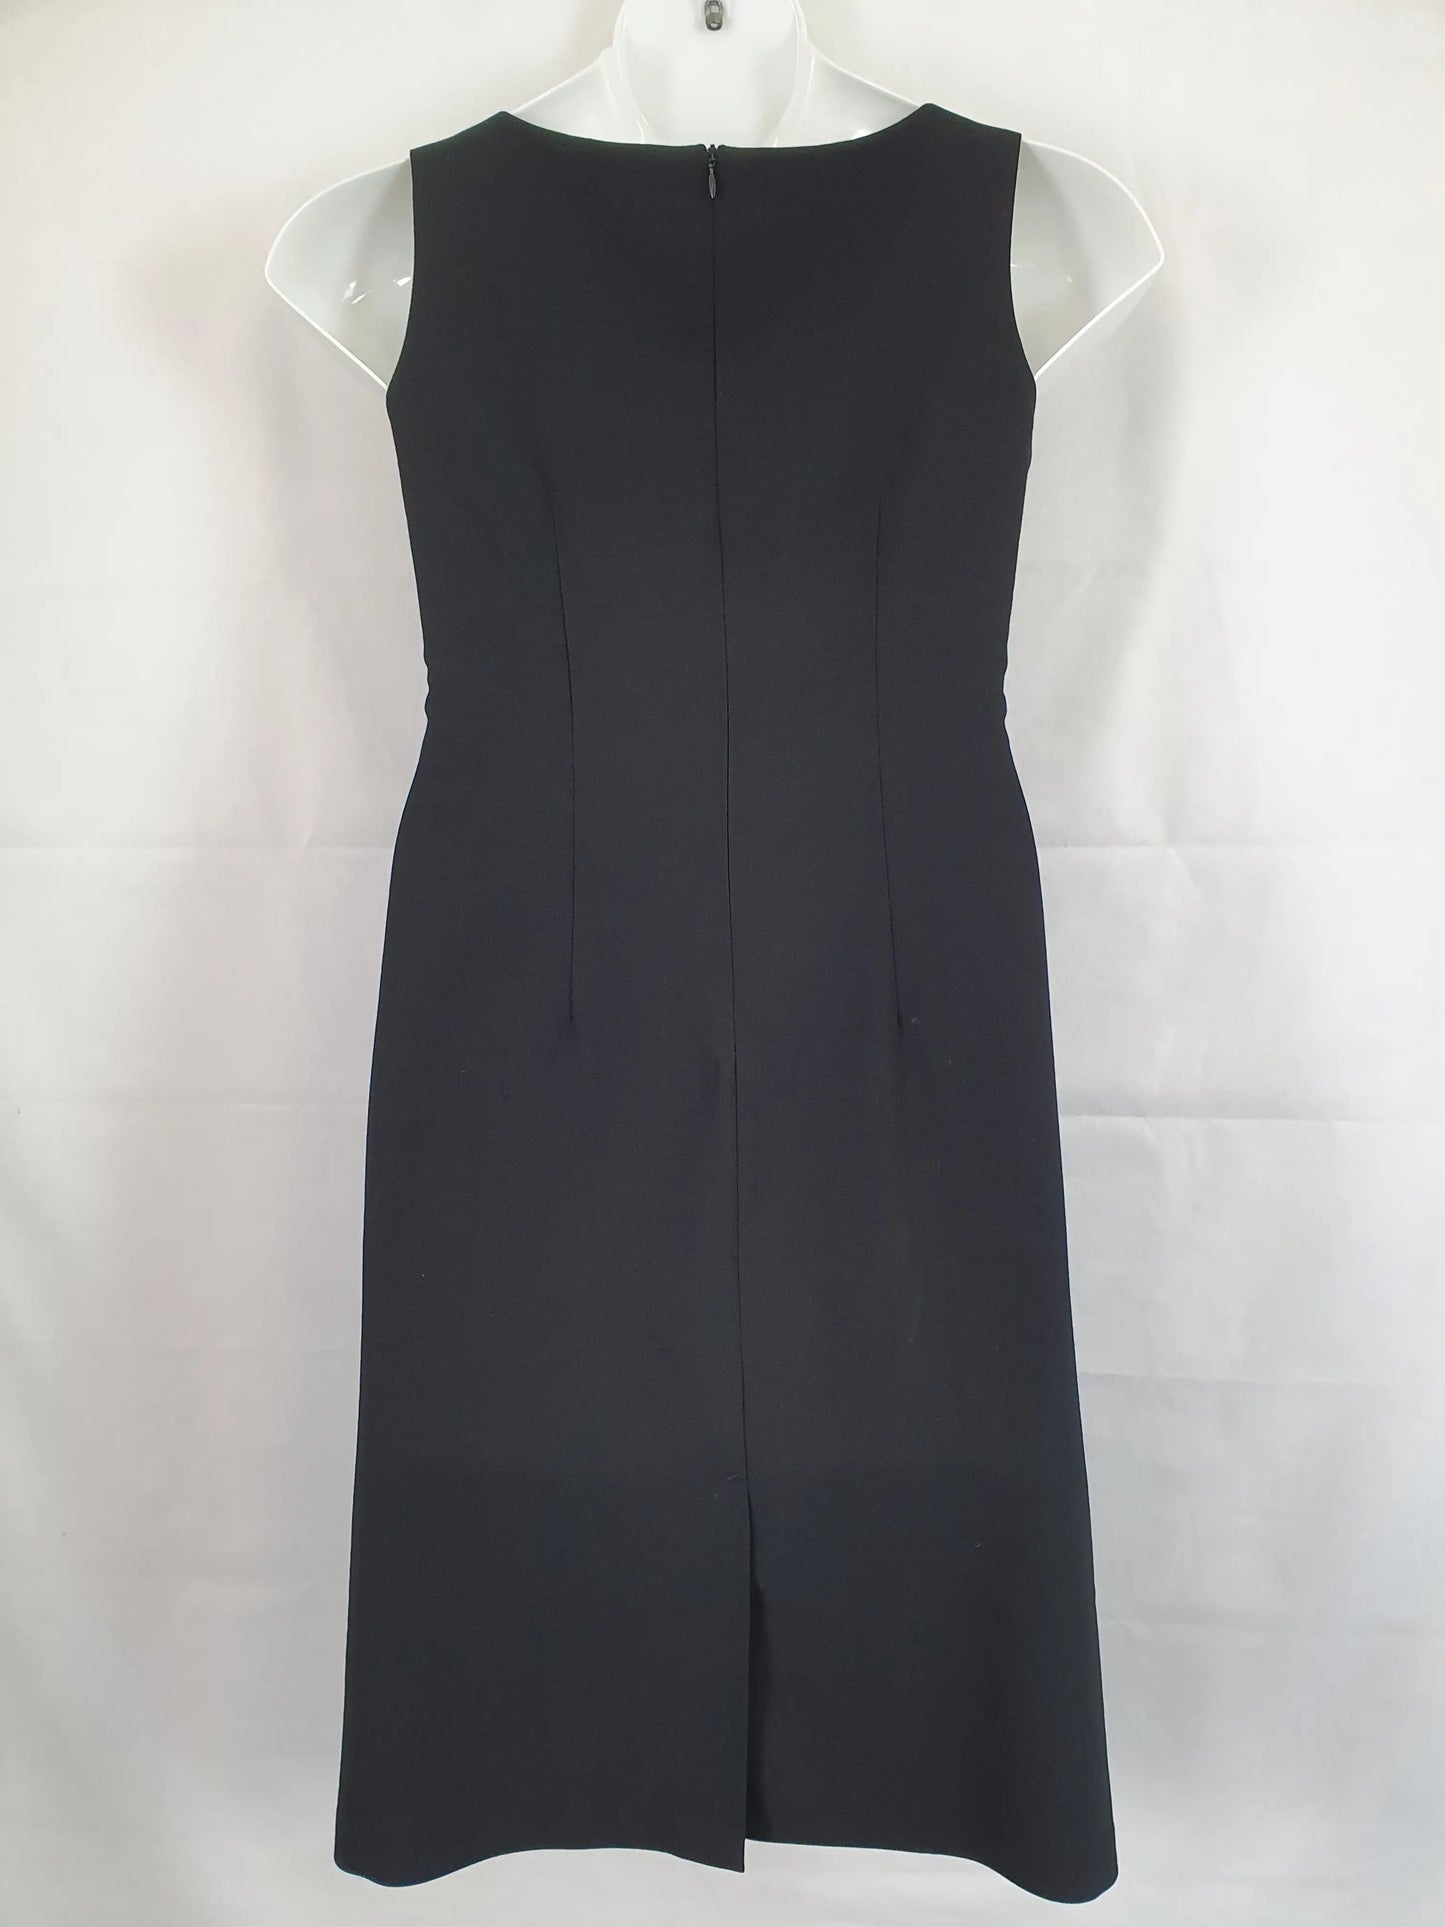 Club Petites Classic Little Black Dress Mini Dress Size 12 Petite by SwapUp-Online Second Hand Store-Online Thrift Store